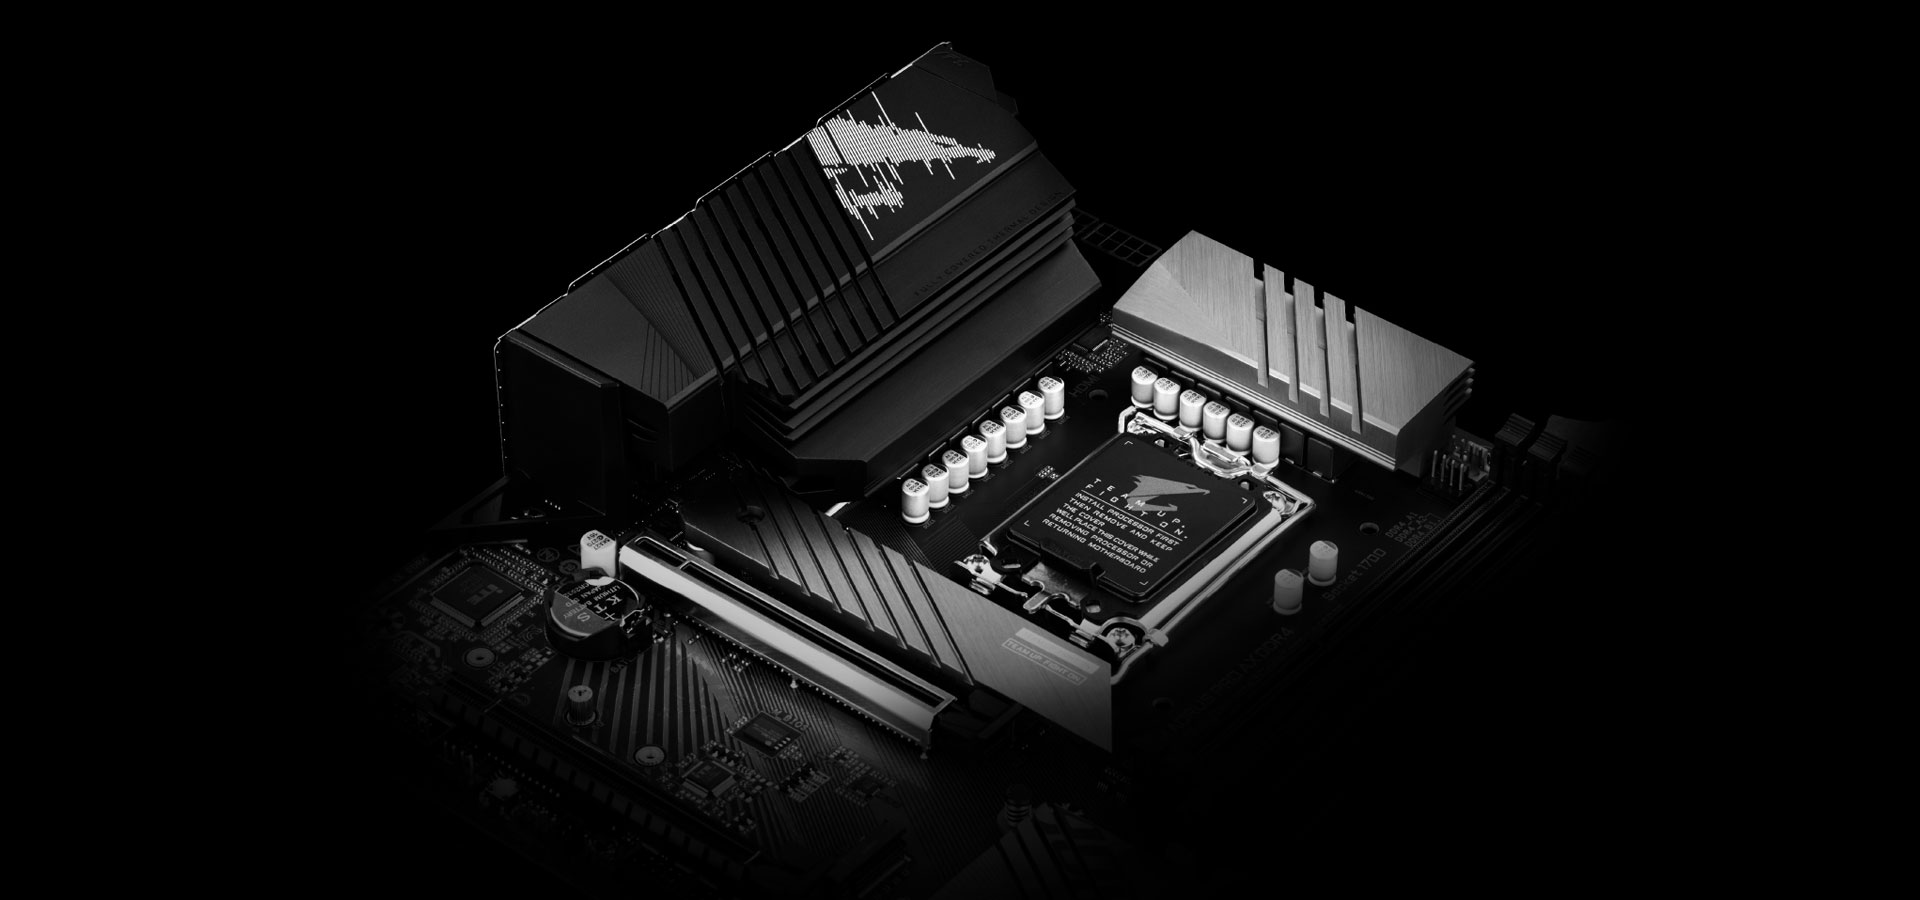 B660M AORUS PRO DDR4 (rev. 1.0) Key Features | Motherboard